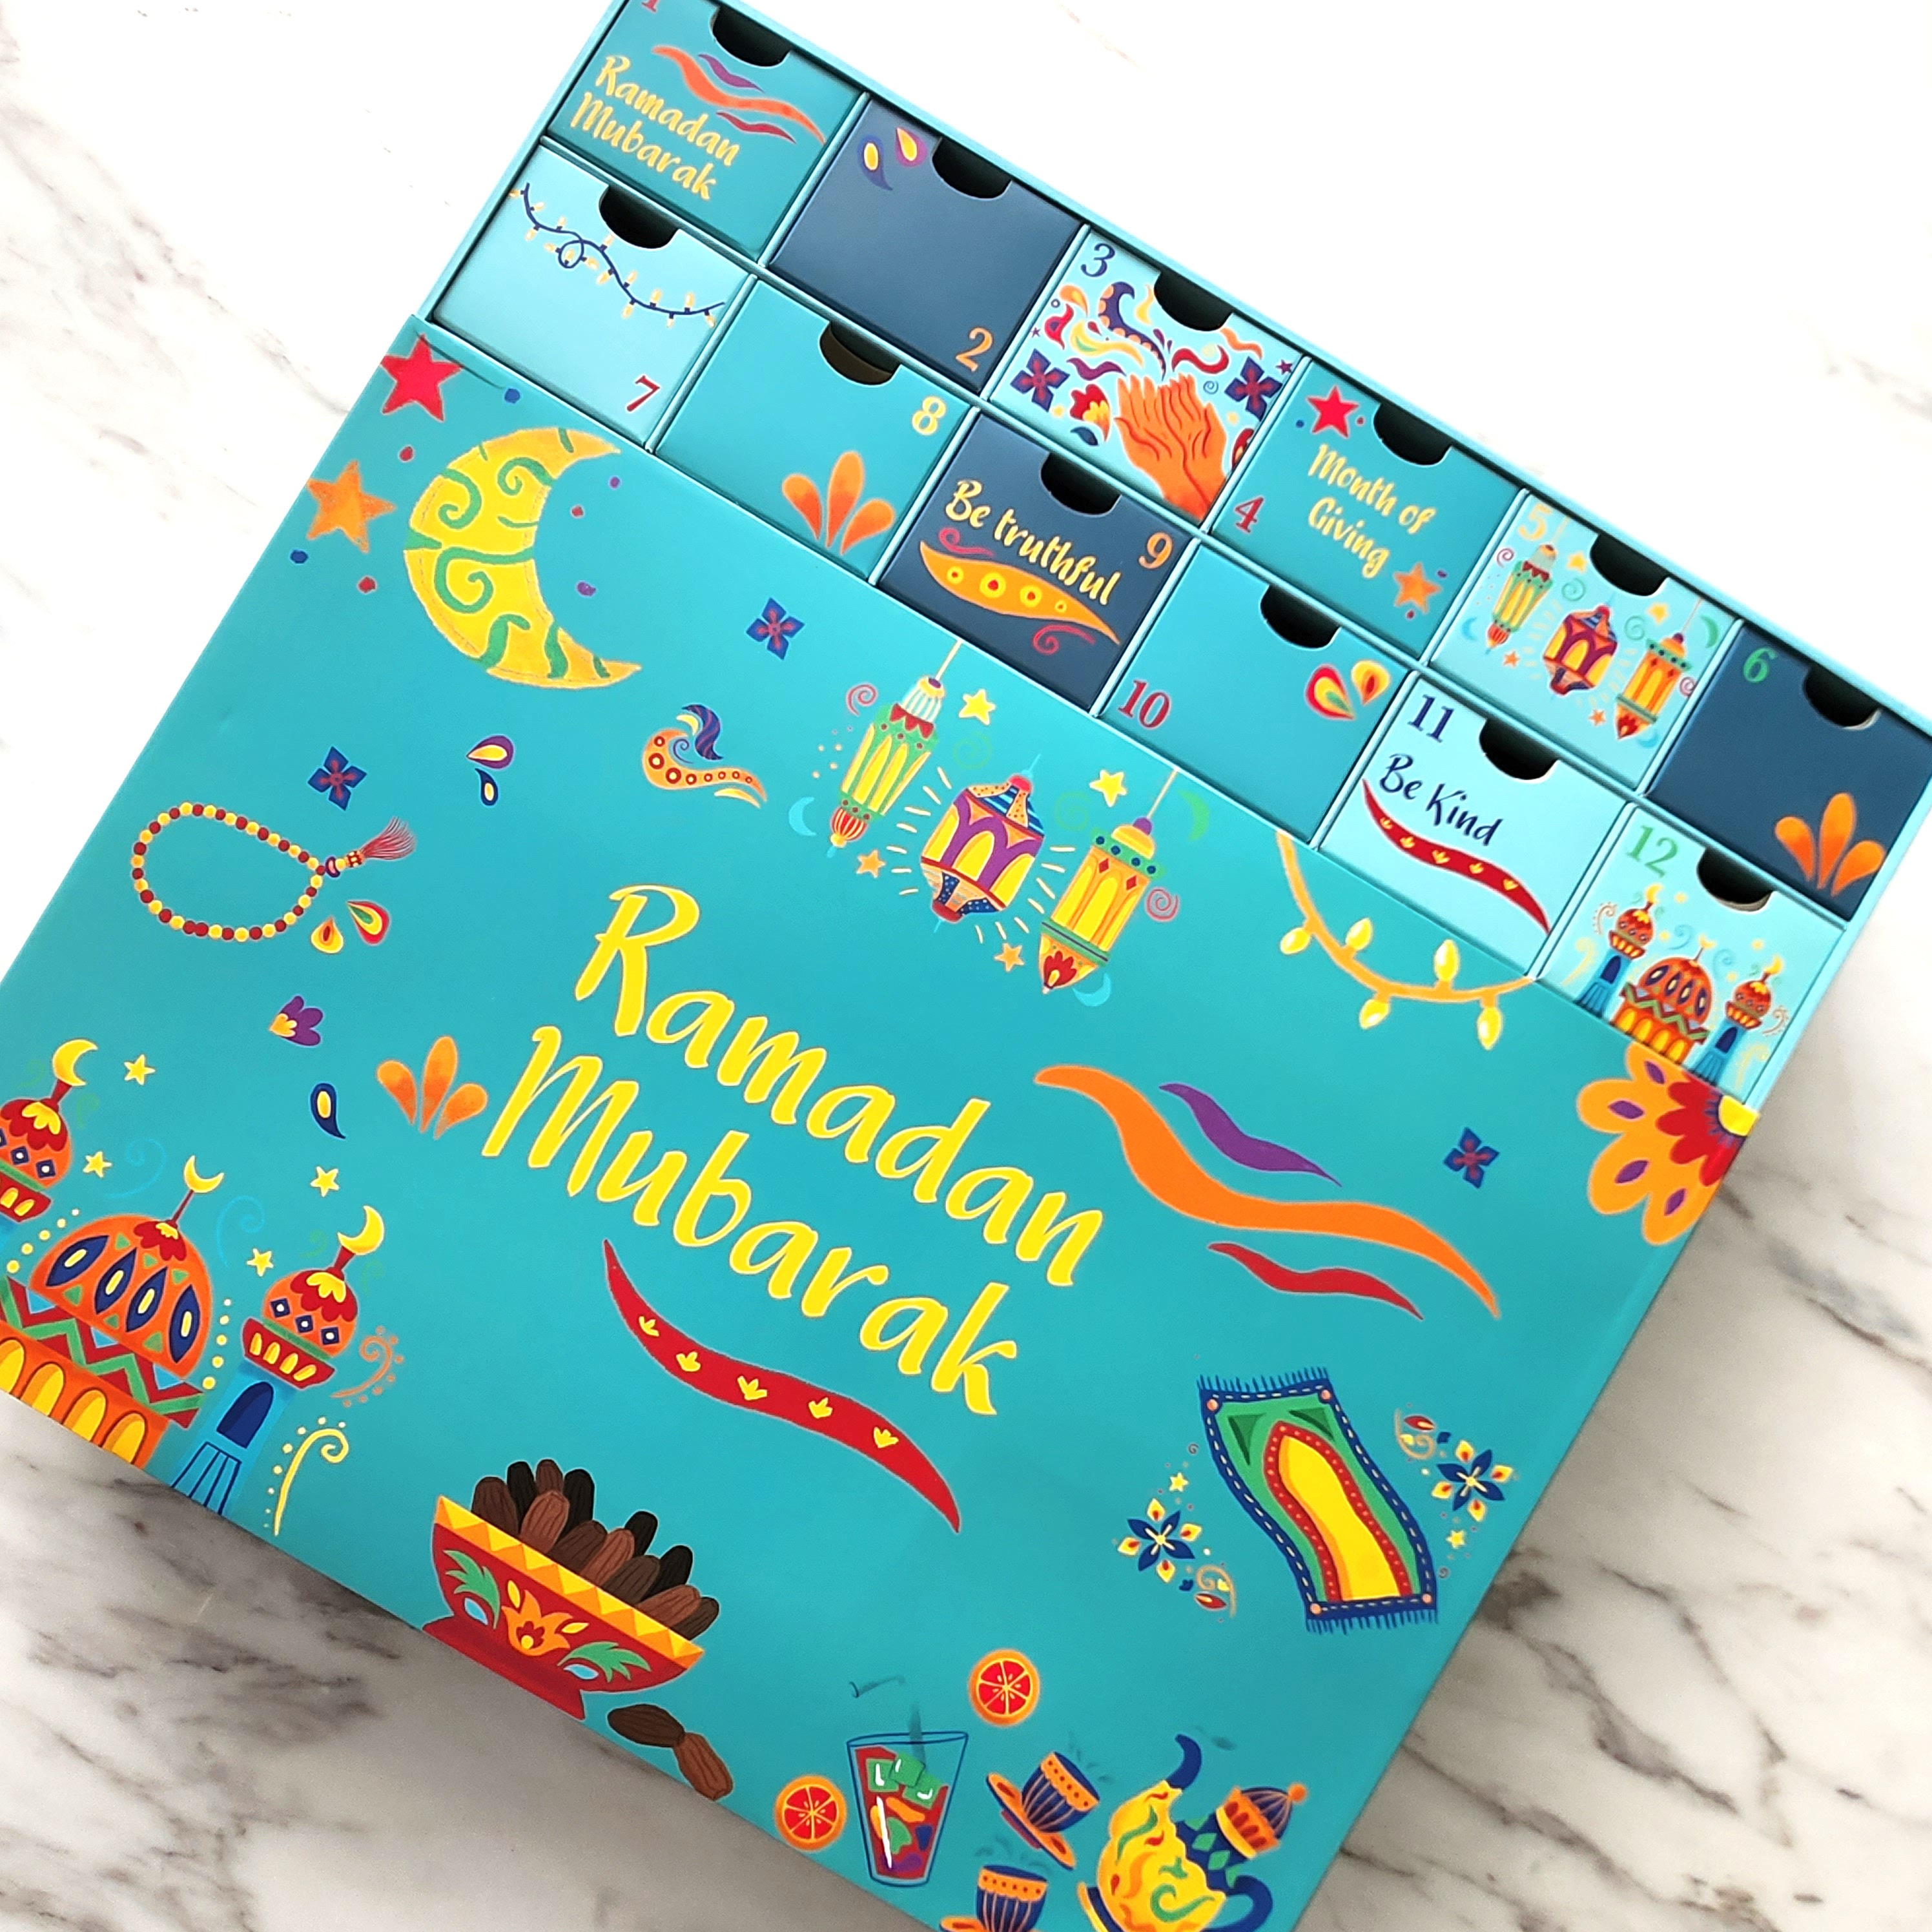 Ramadan Advent Calendar 